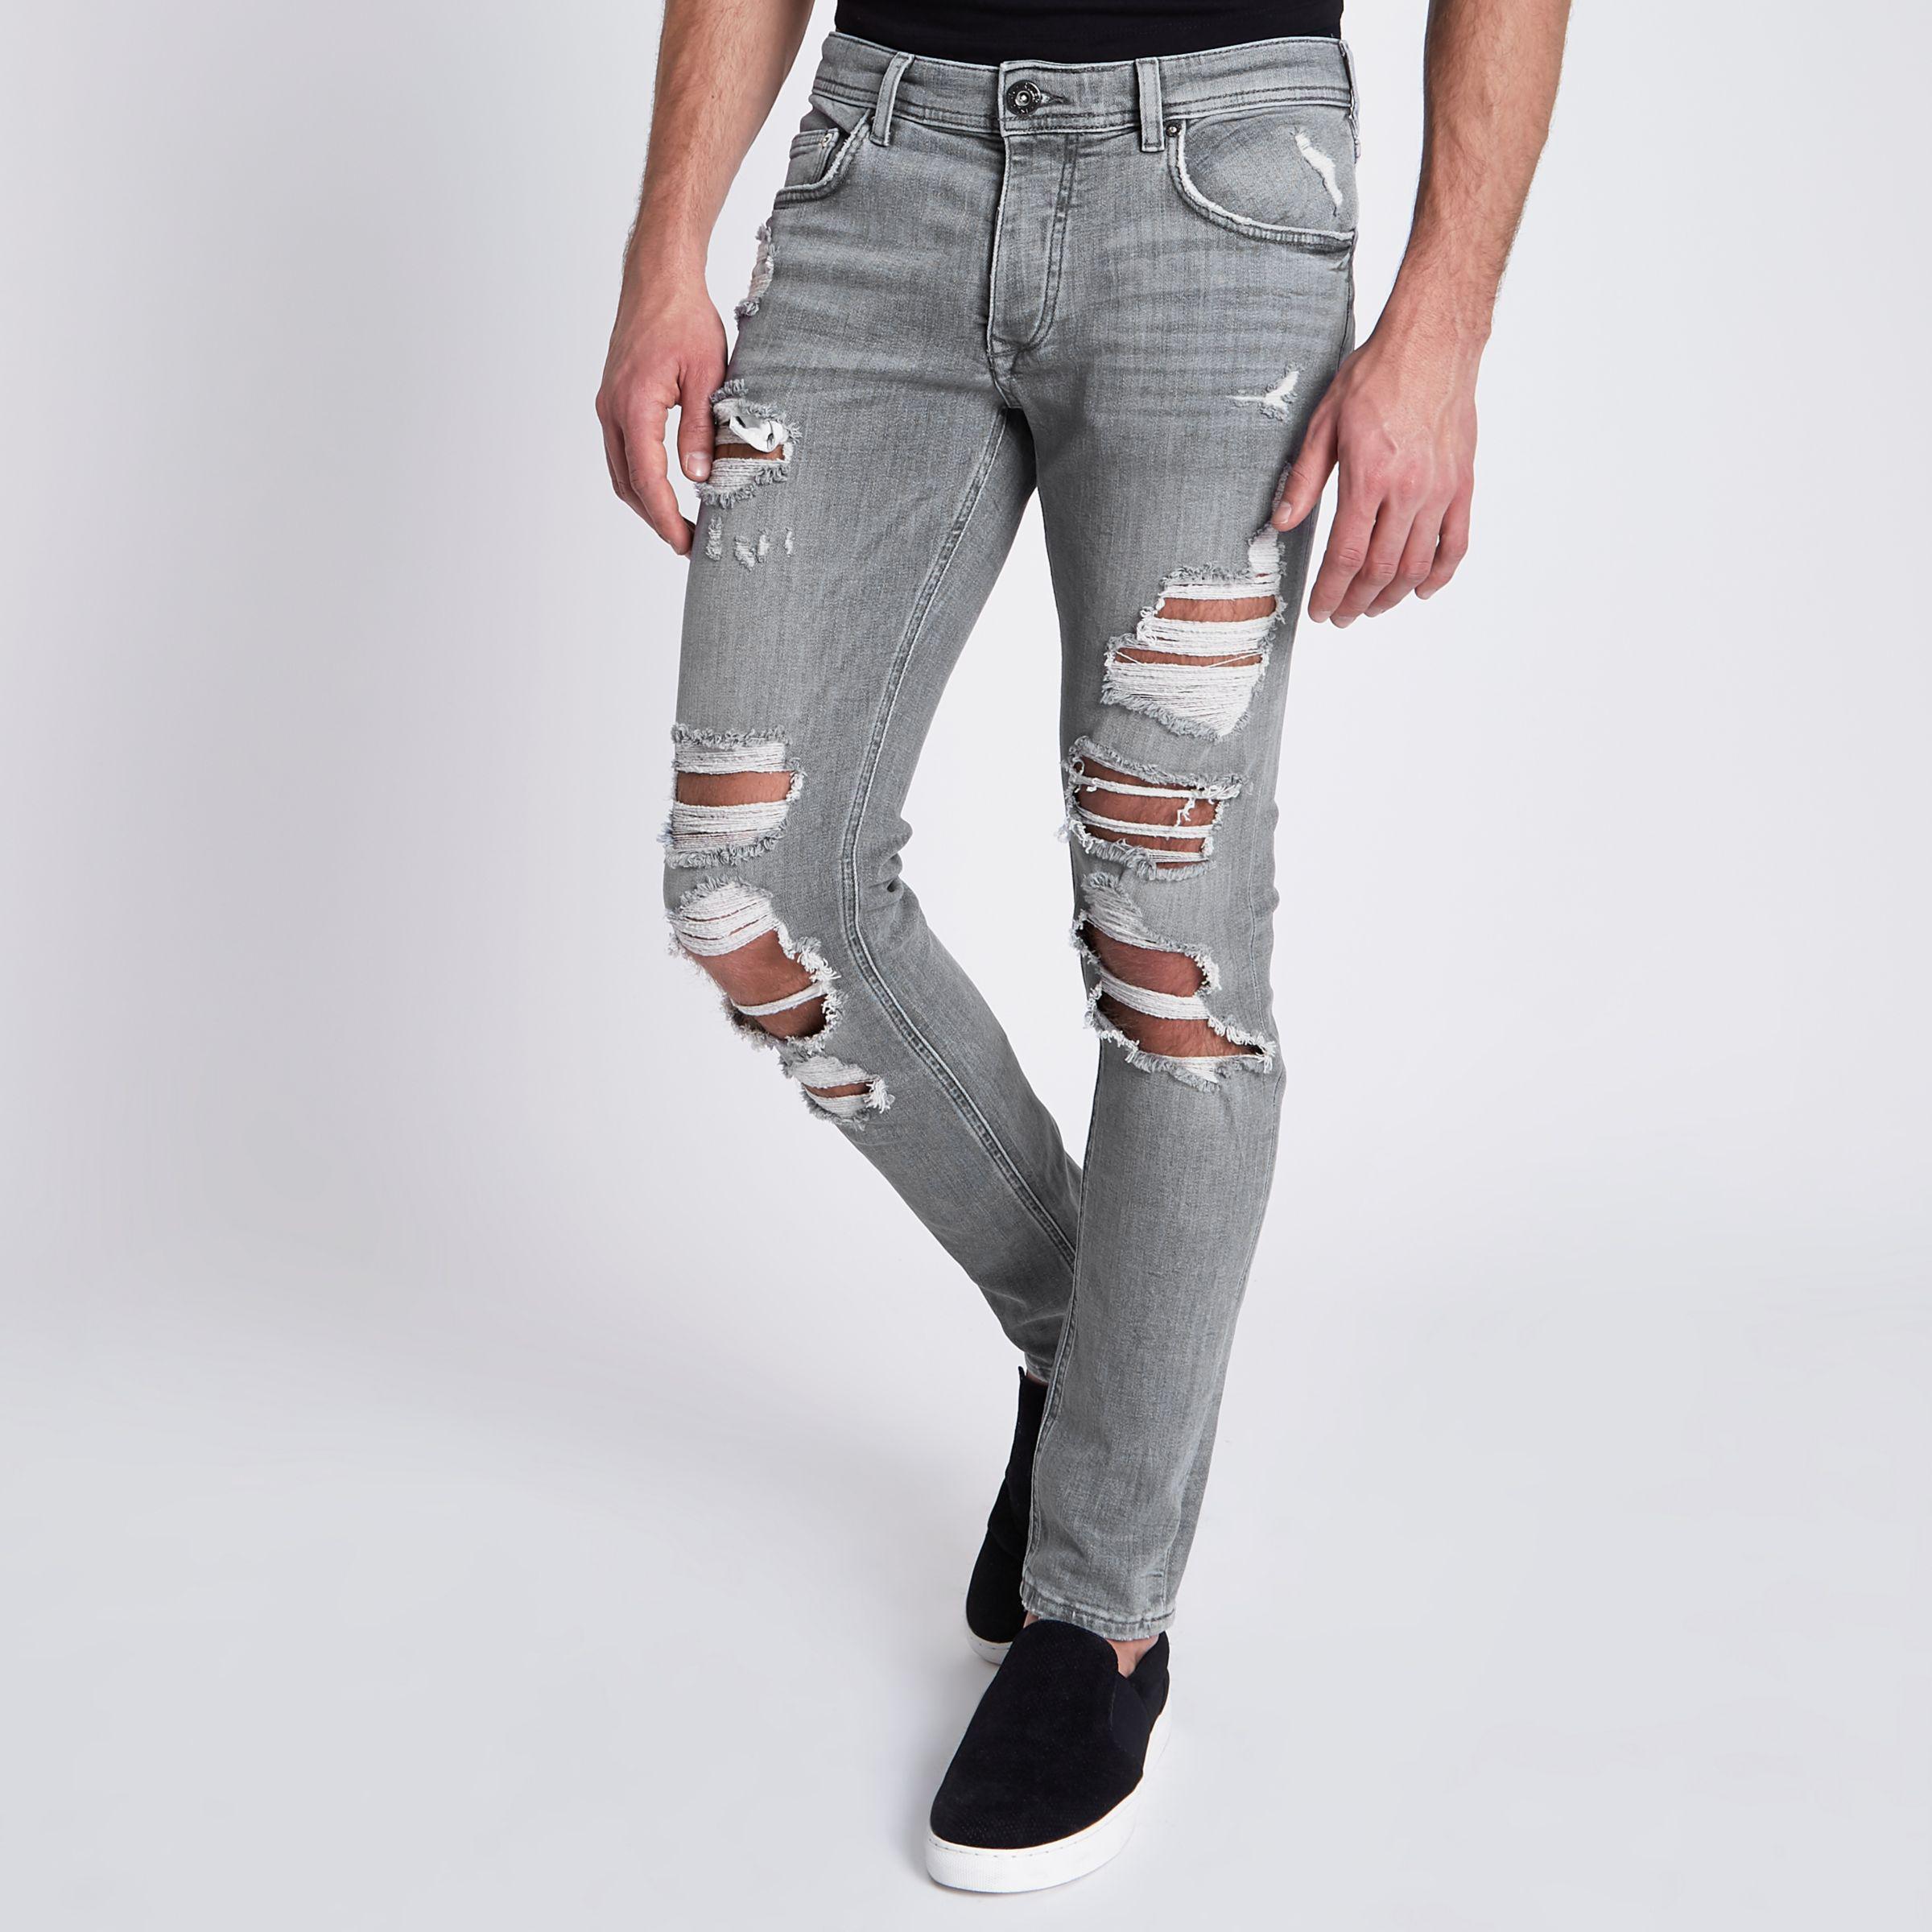 grey destroyed skinny jeans